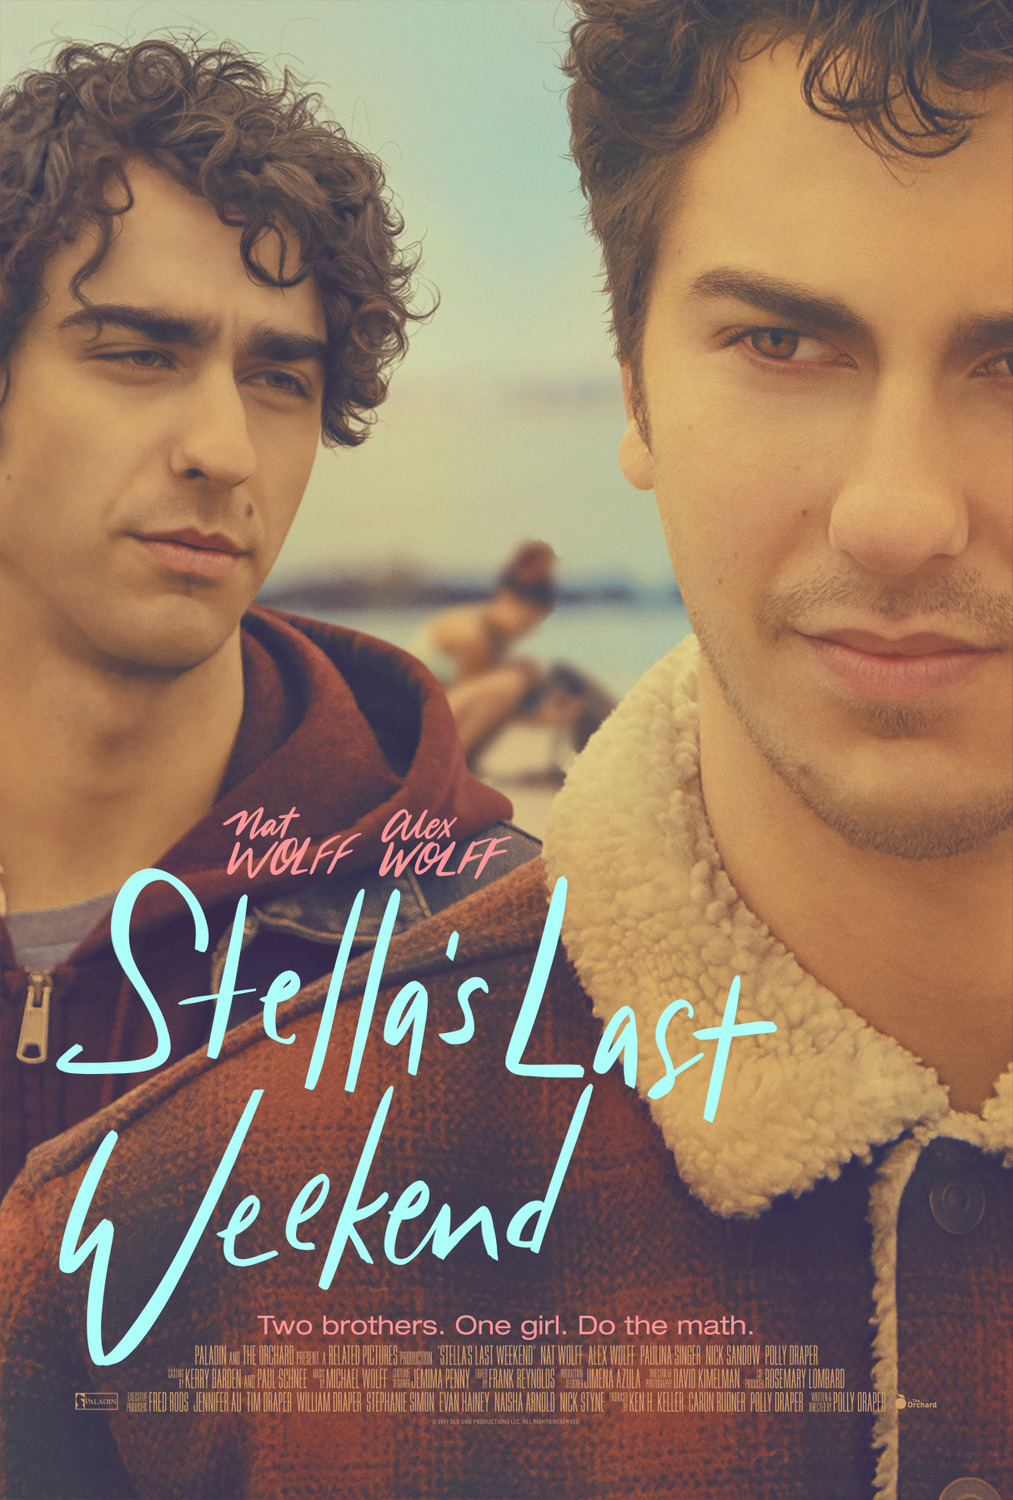 Постер - Stella‘s Last Weekend: 1013x1500 / 481.64 Кб